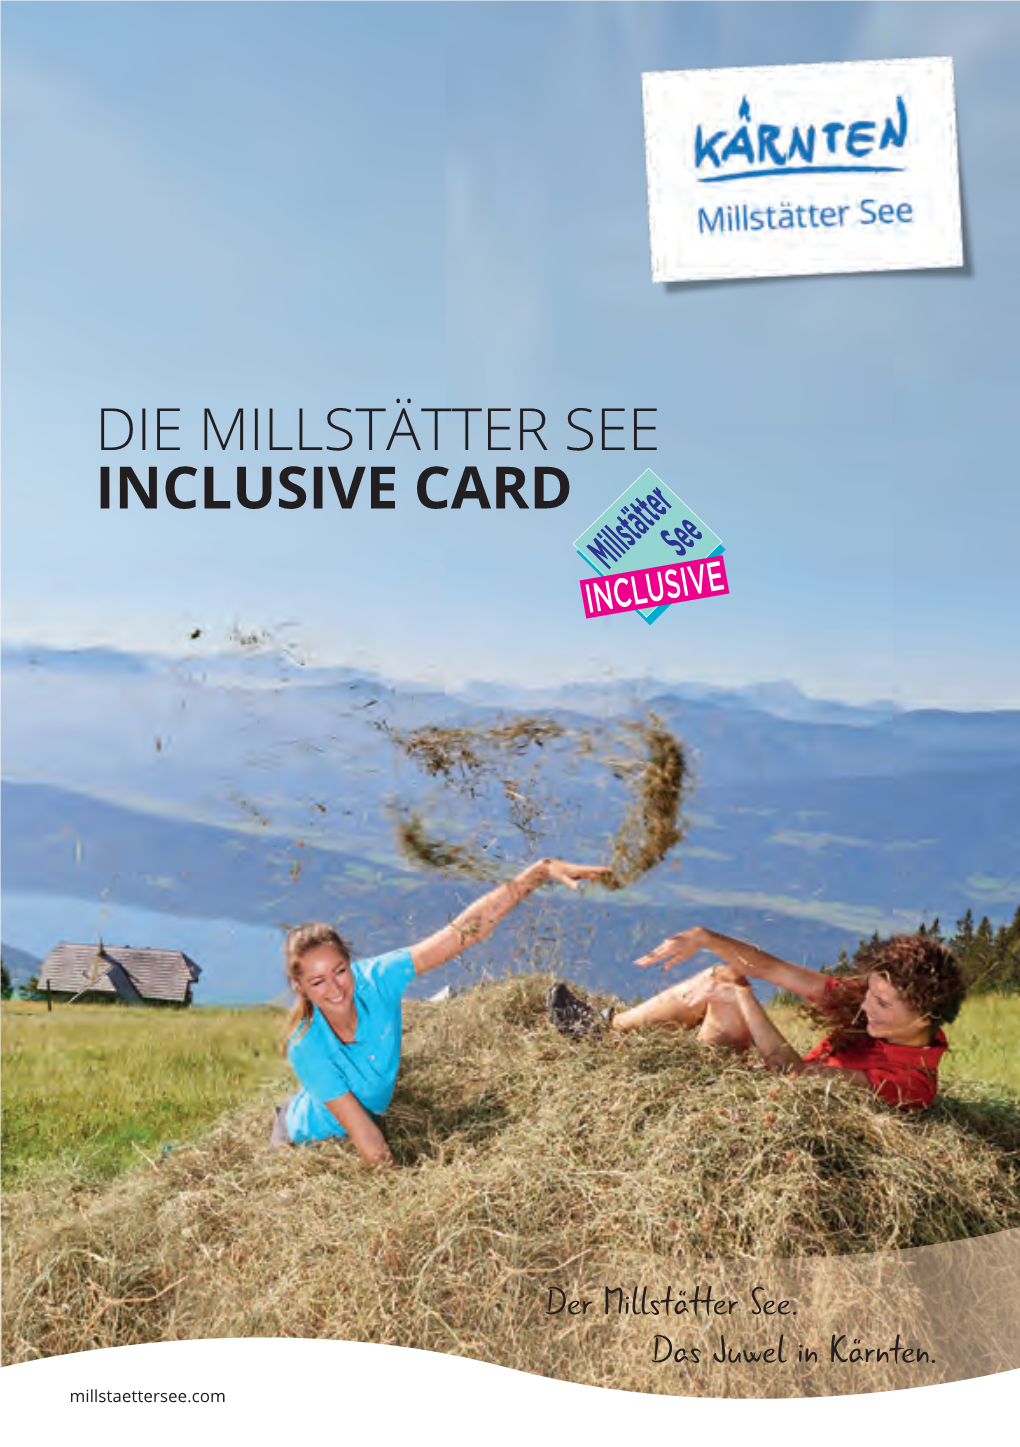 Die Millstätter See Inclusive Card